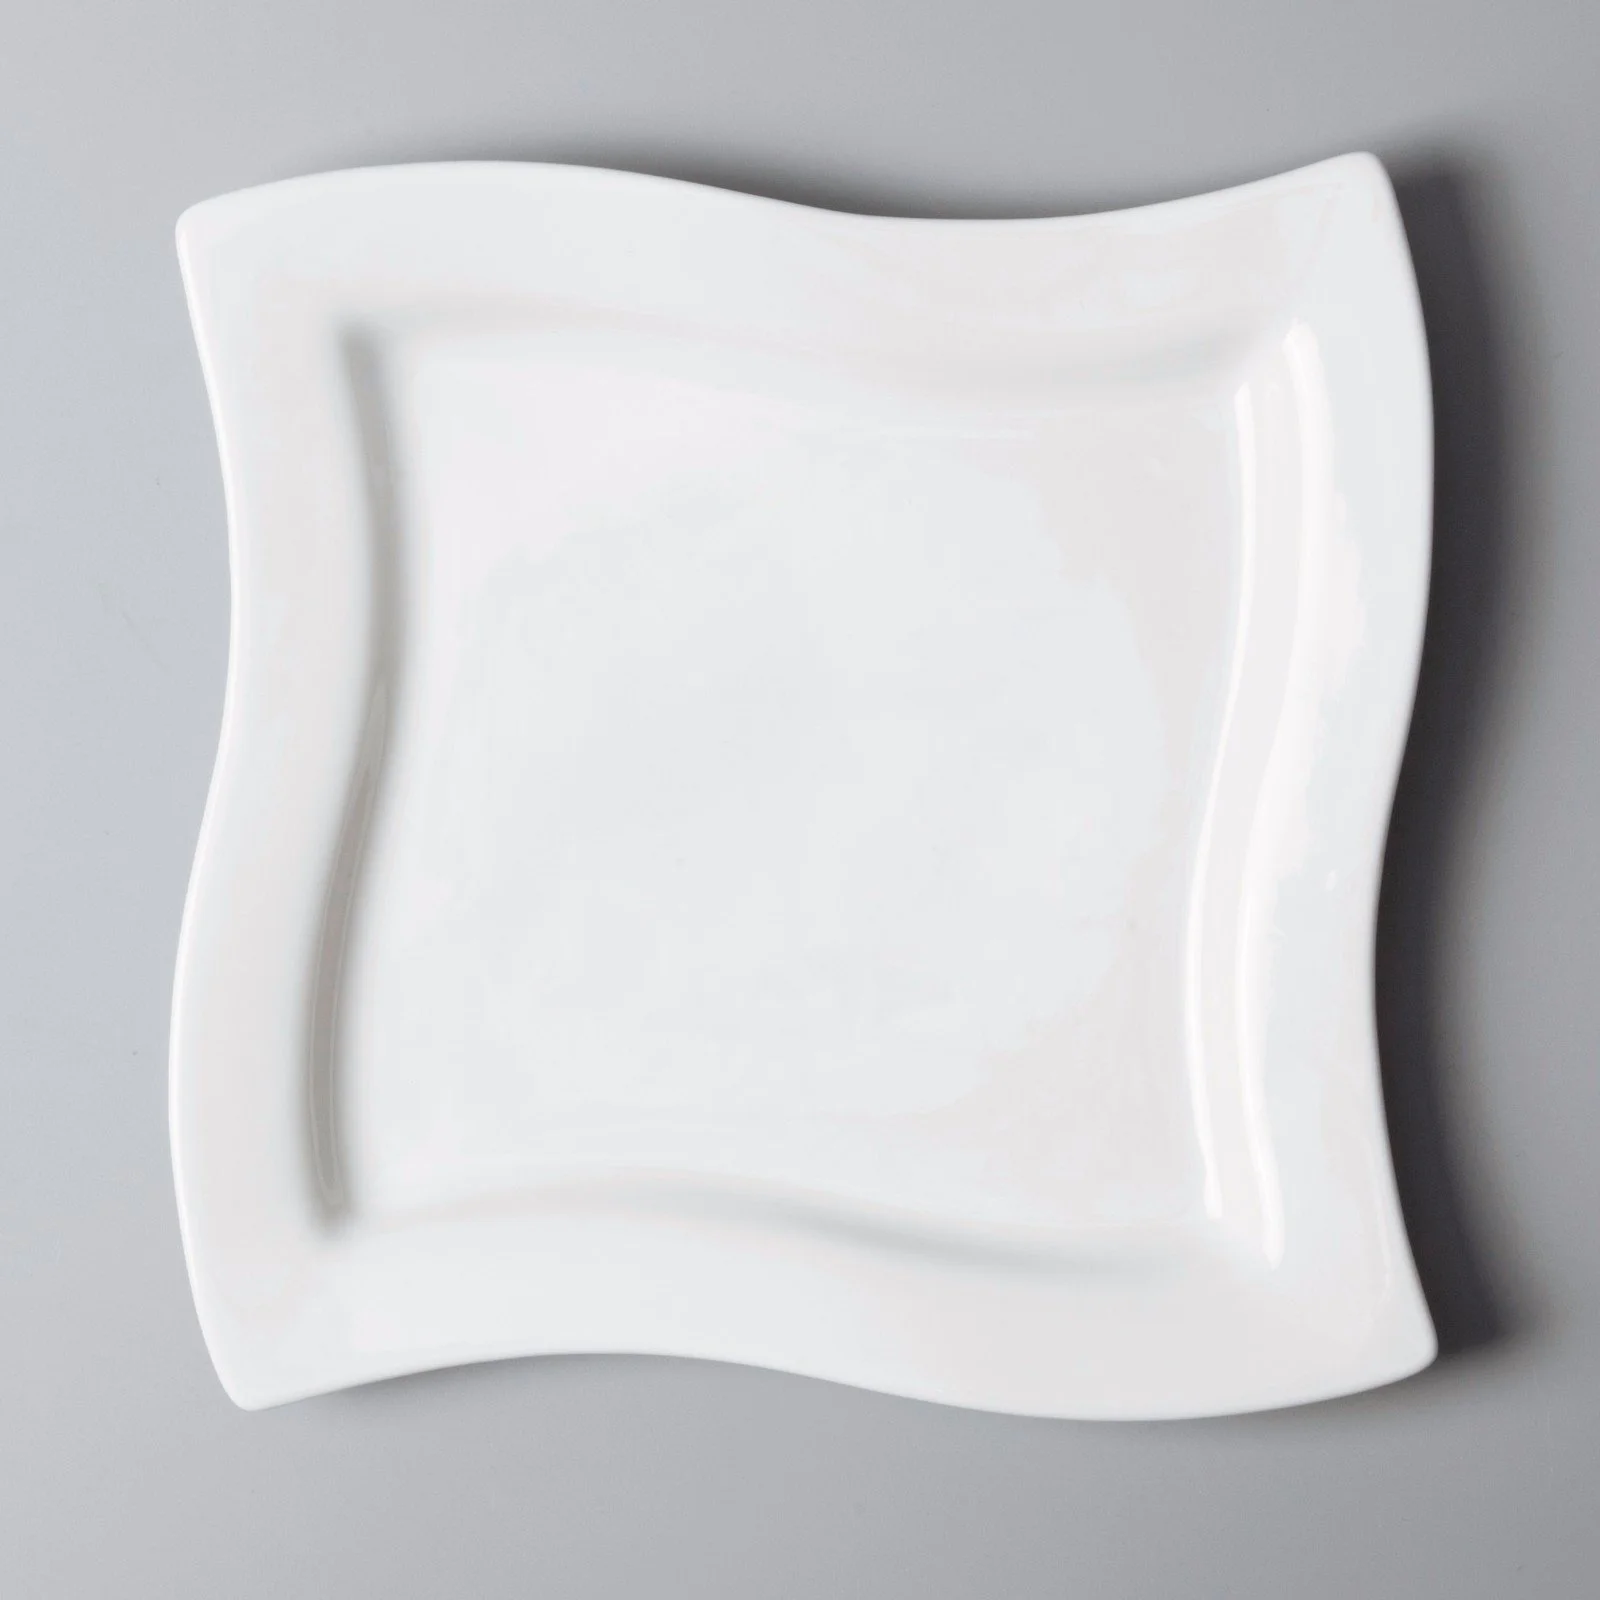 Two Eight white porcelain tableware irregular color german